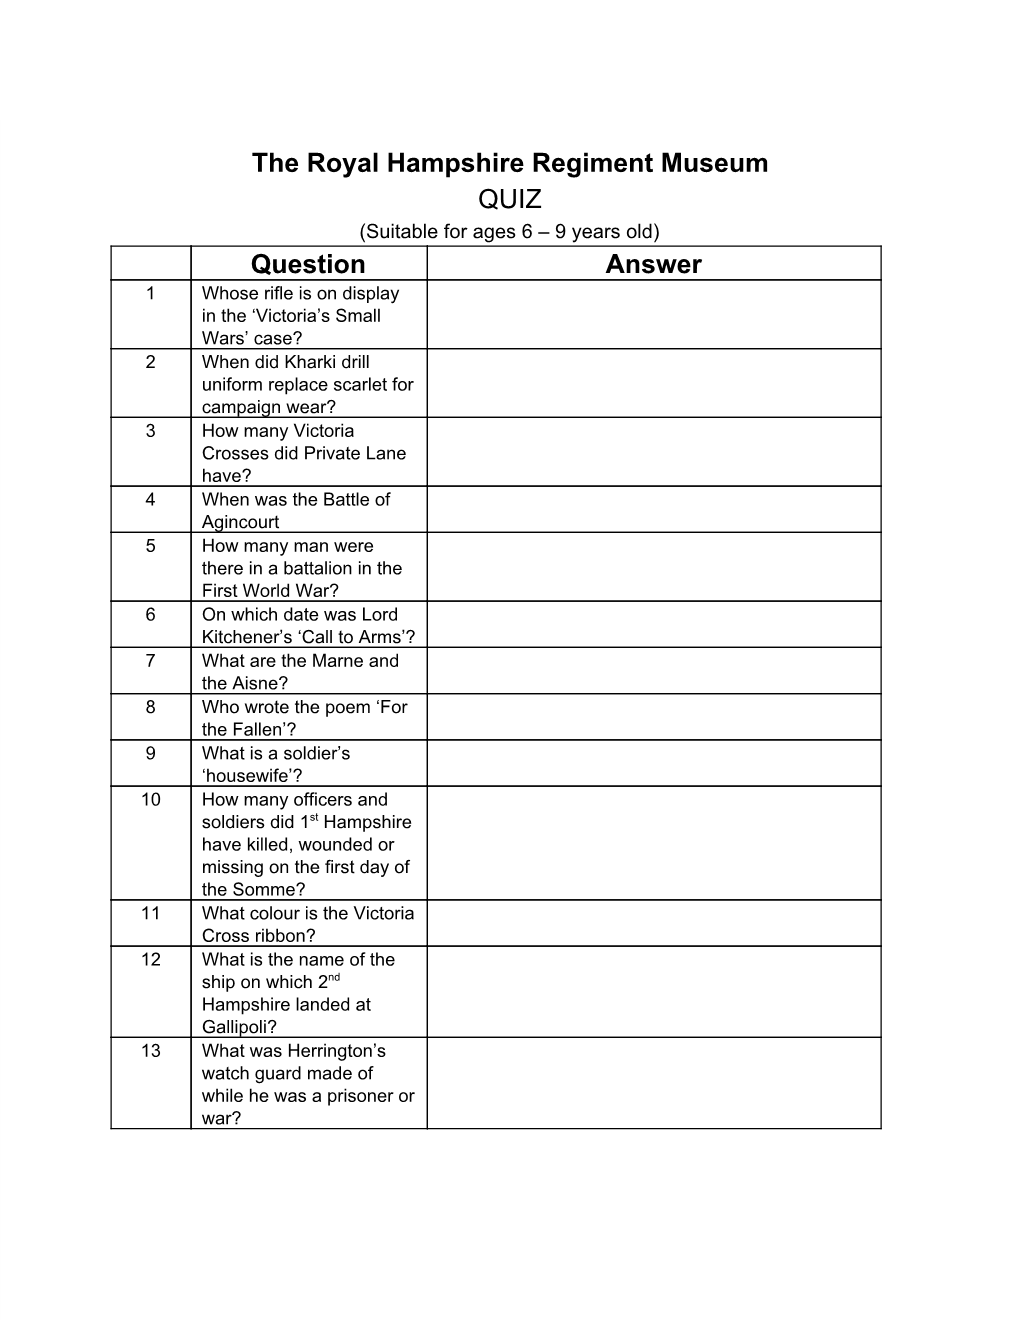 The Royal Hampshire Regiment Museum QUIZ Question Answer